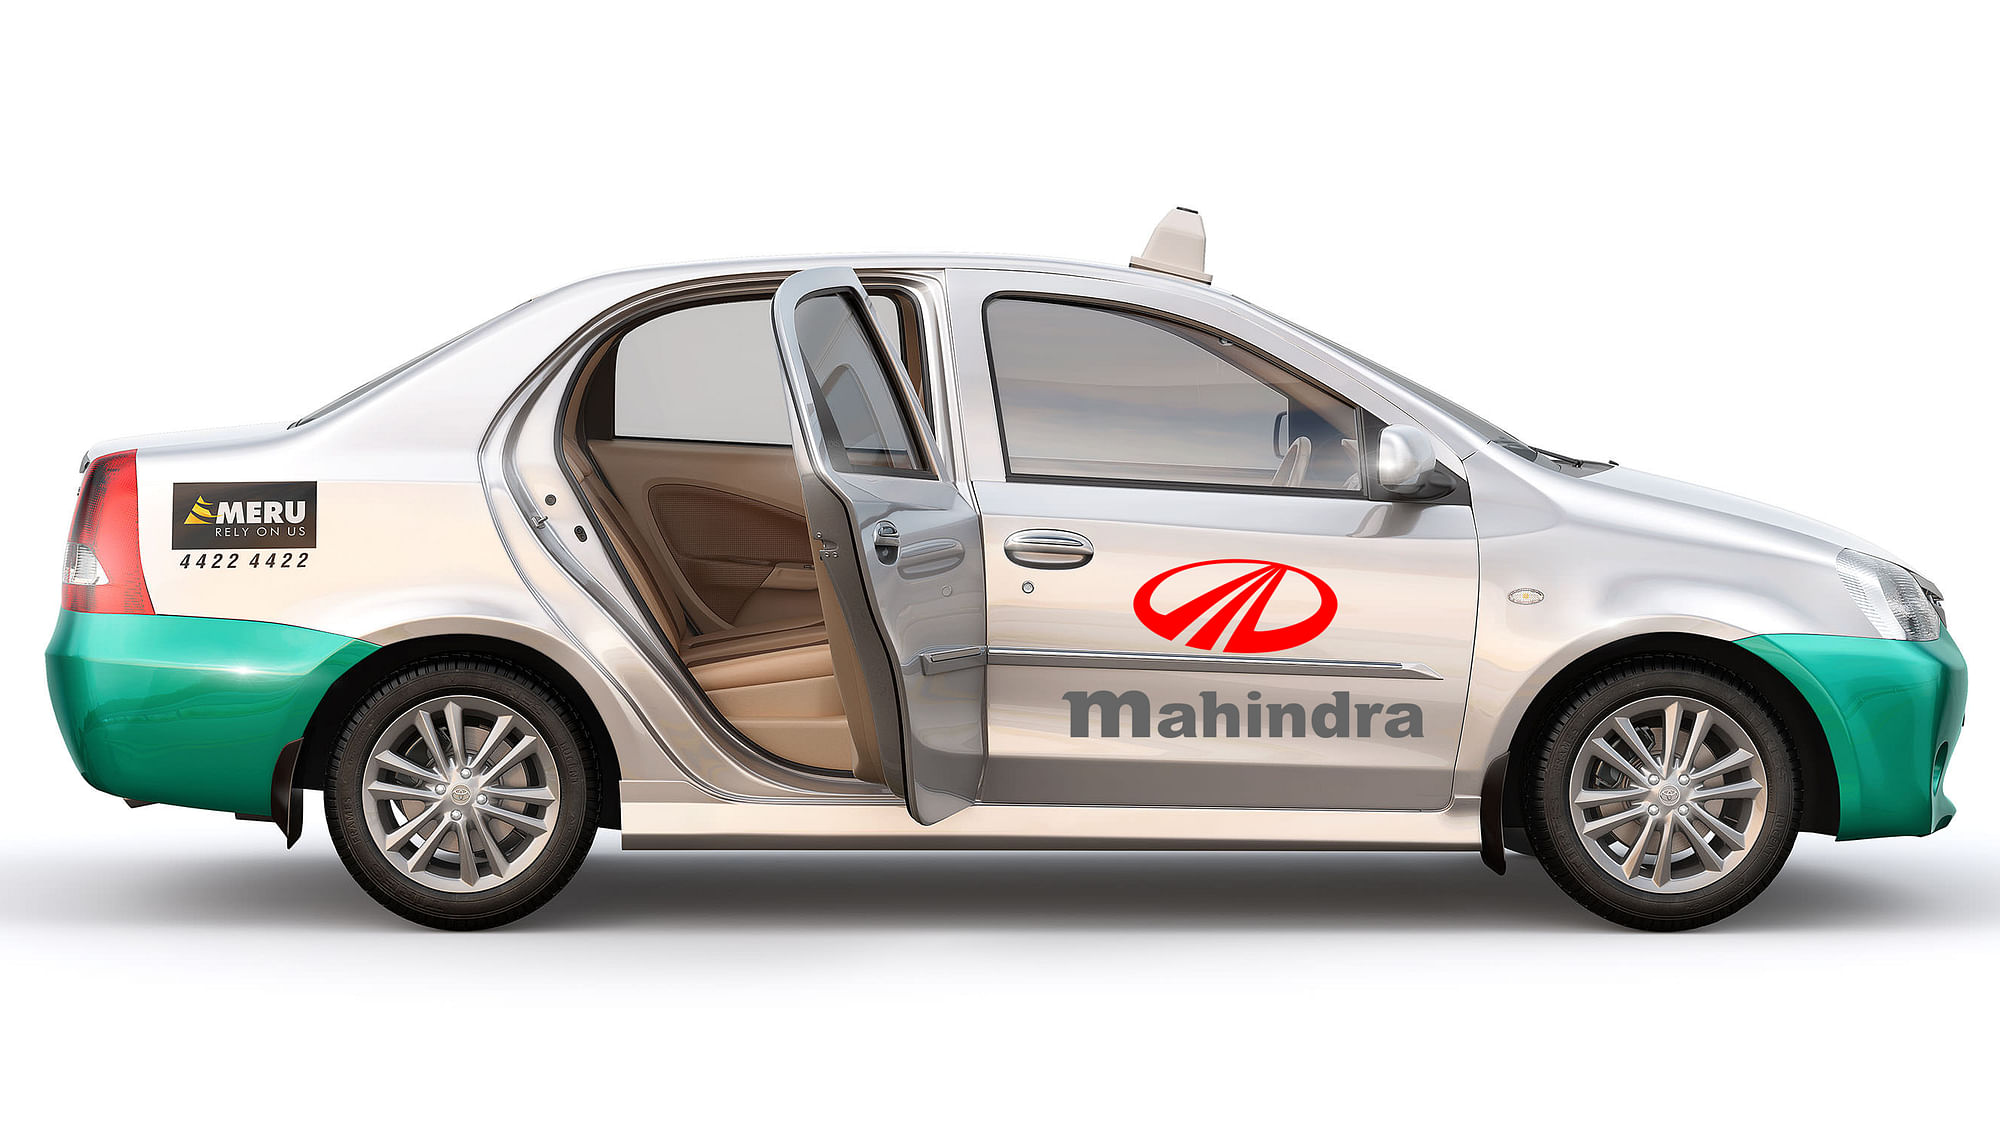 Mahindra &amp; Mahindra has acquired 55 percent of Meru Cabs.